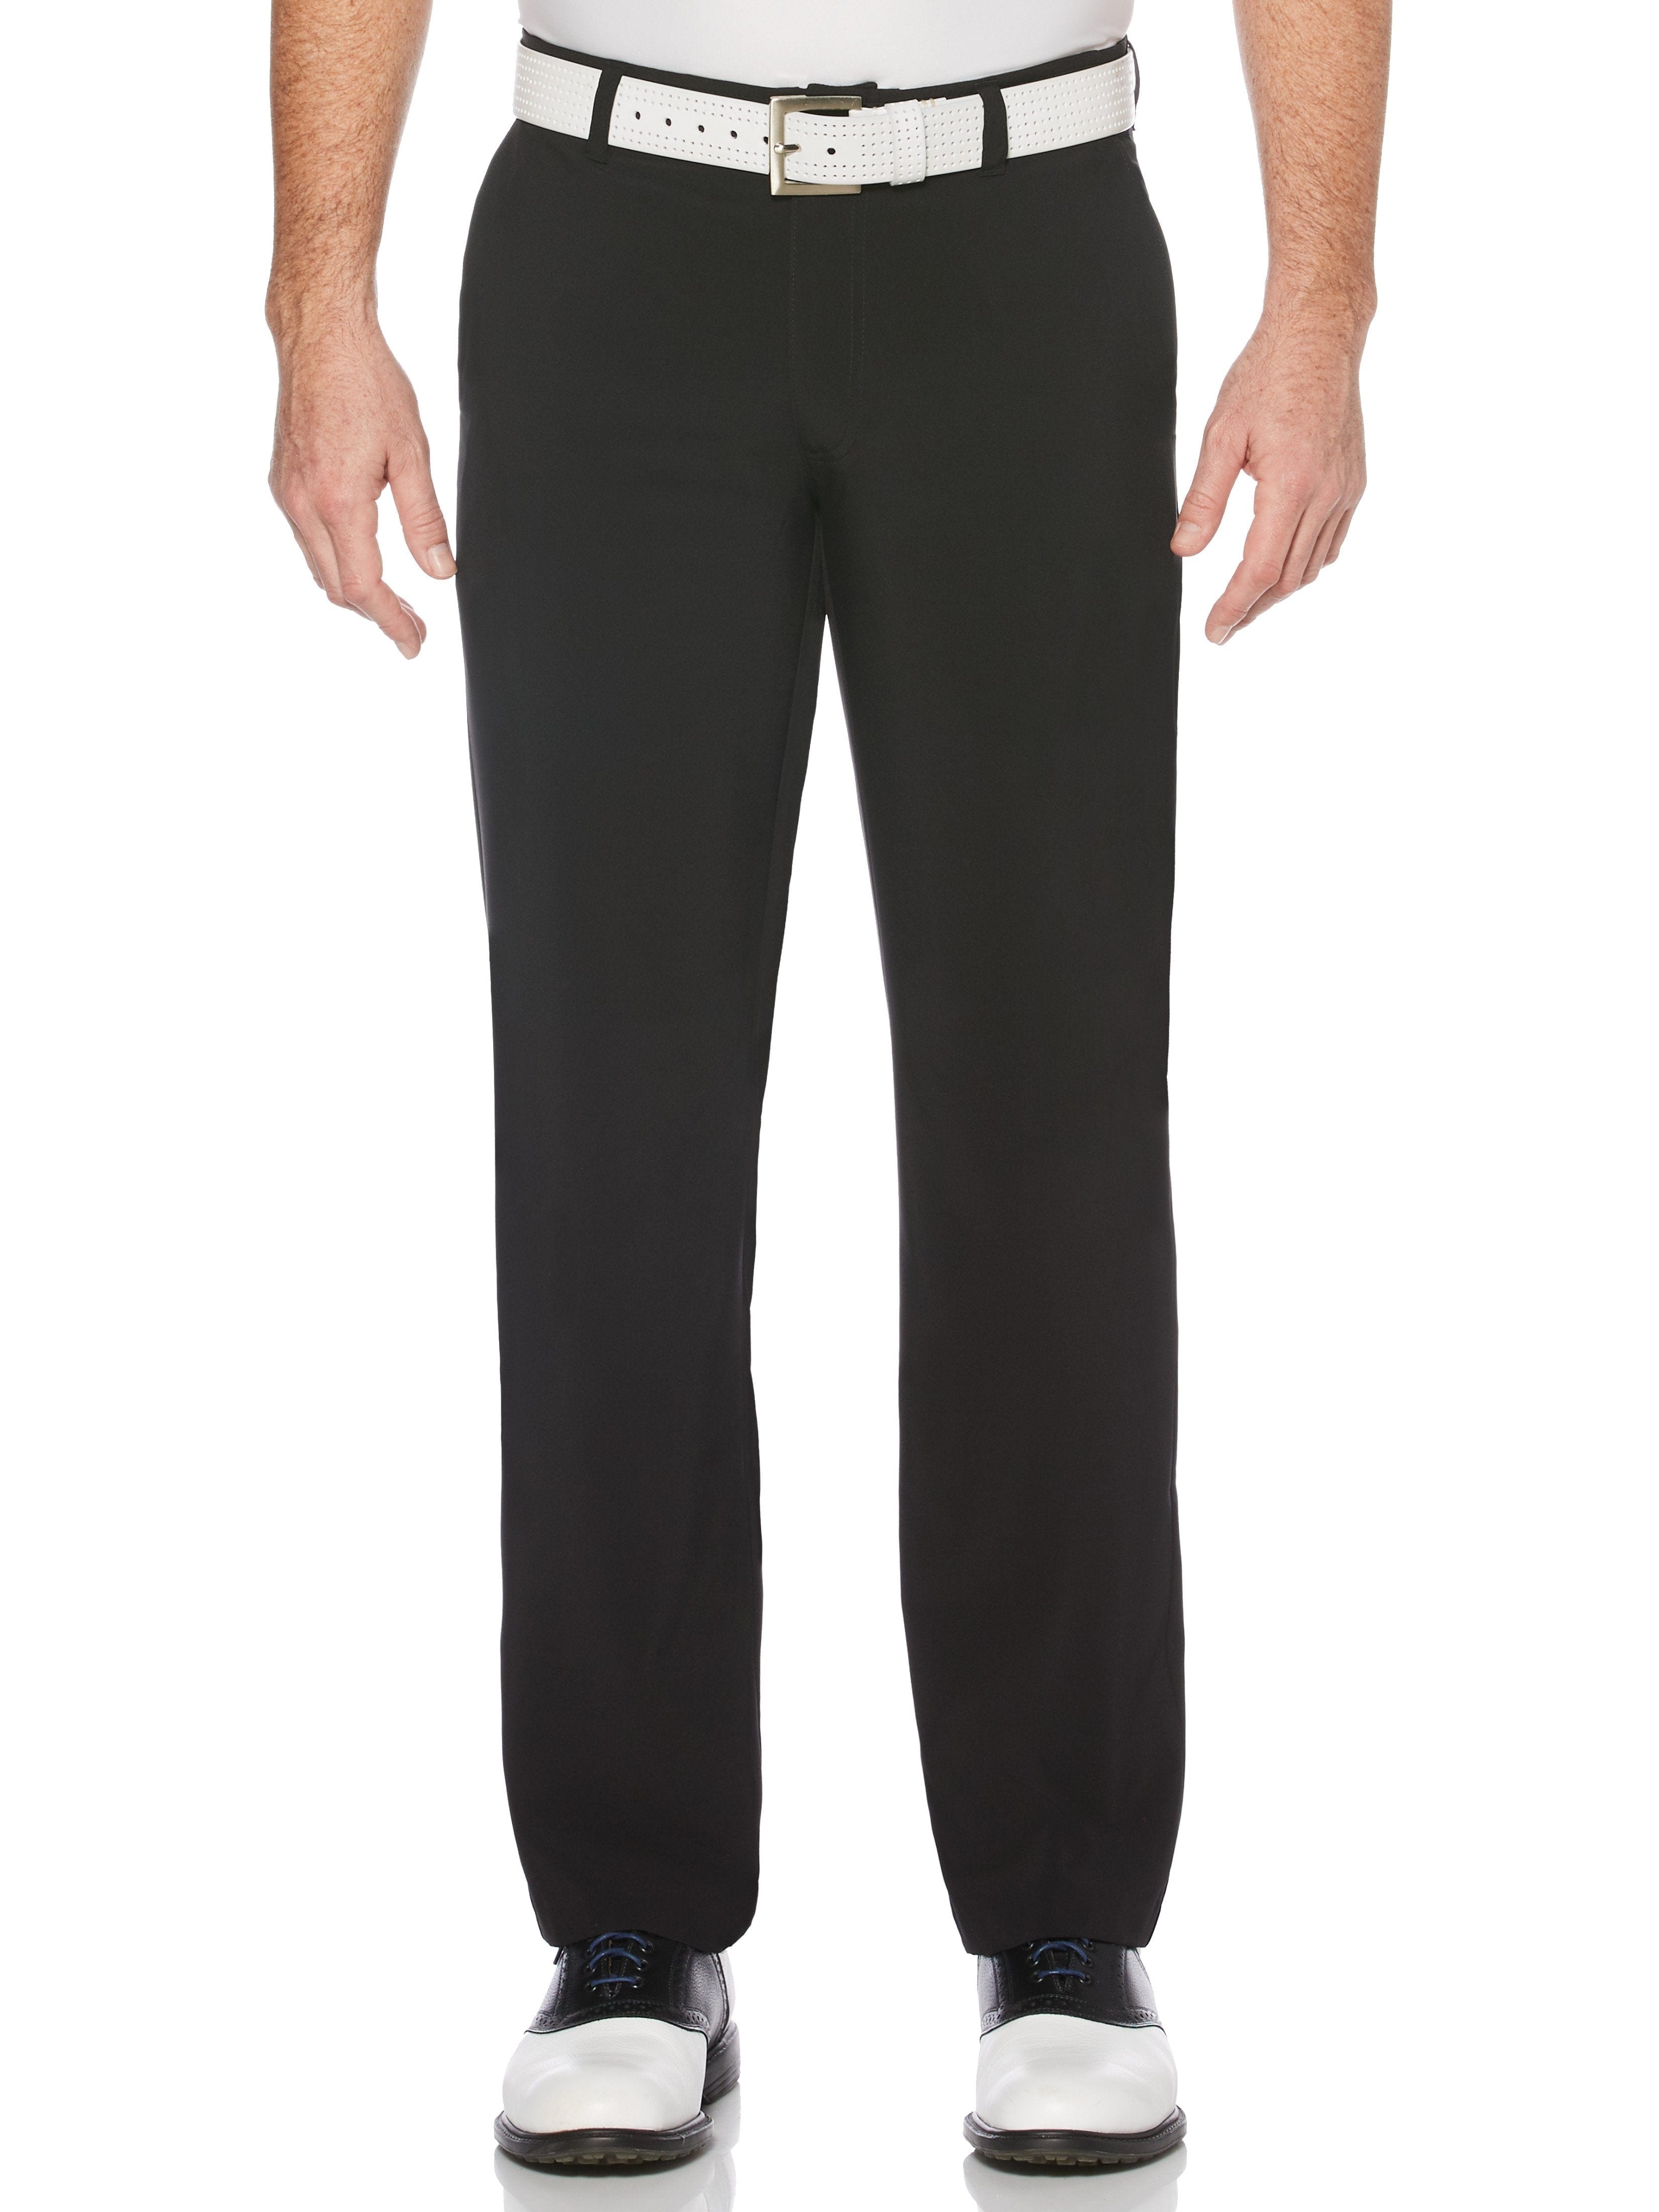 Jack Nicklaus Mens Flat Front Active Flex Pants, Size 36 x 34, Black, Polyester/Elastane | Golf Apparel Shop